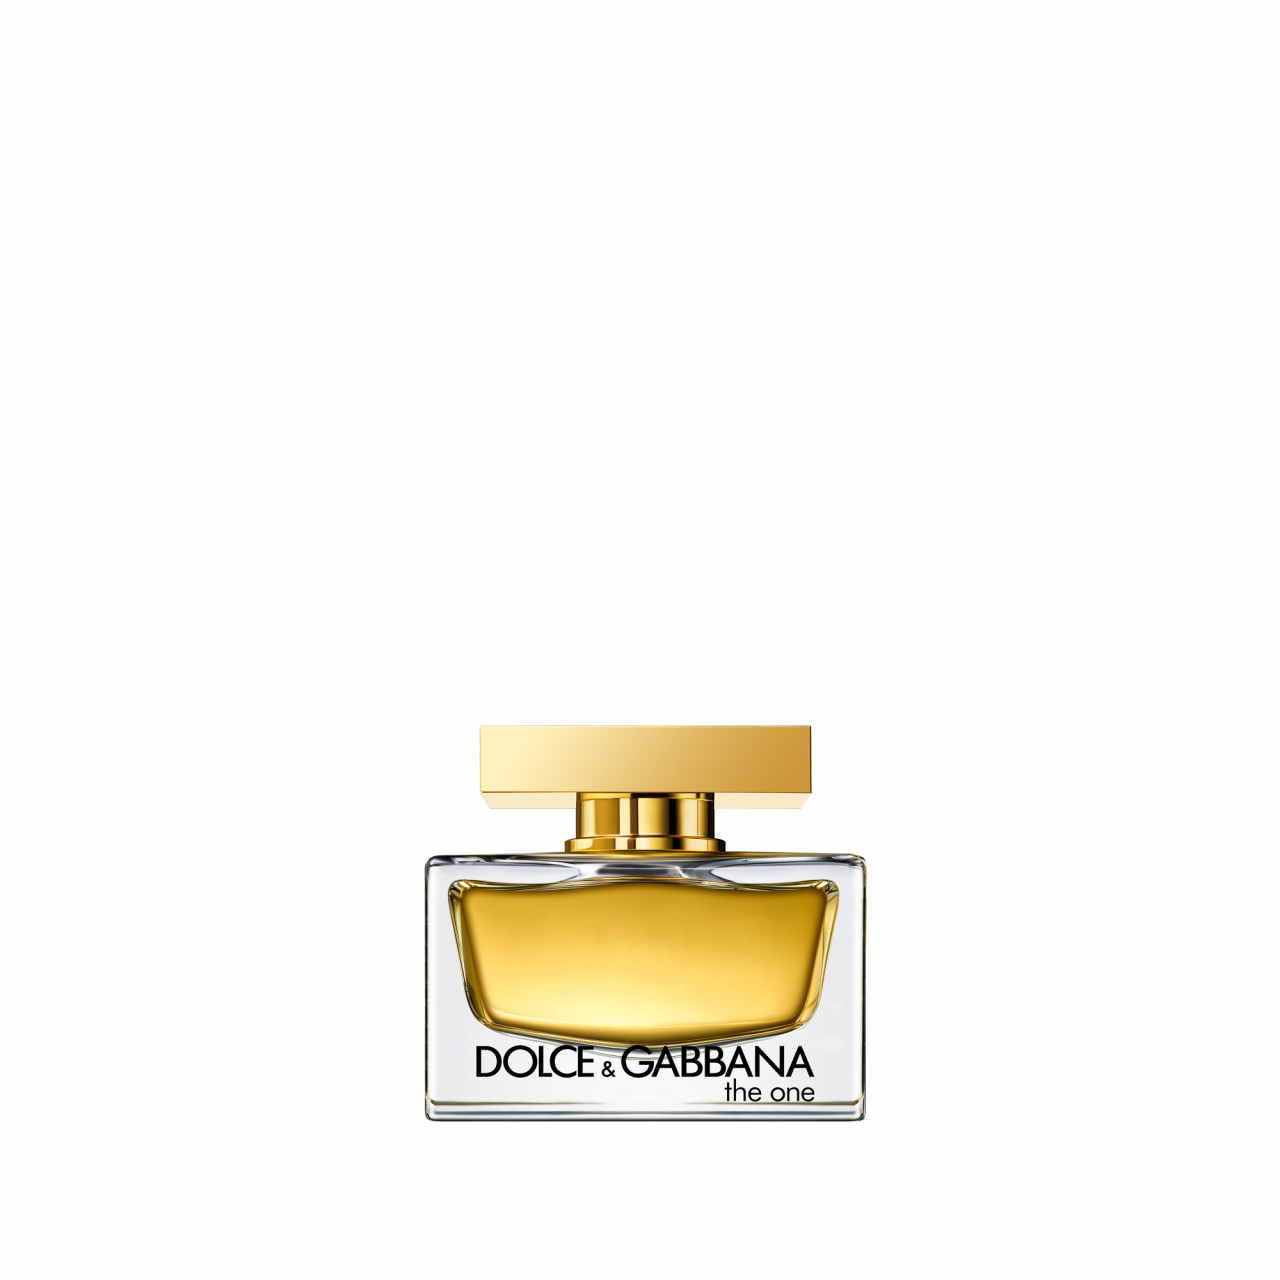 Dolce&Gabbana - The One Eau de Parfum -  30 ml